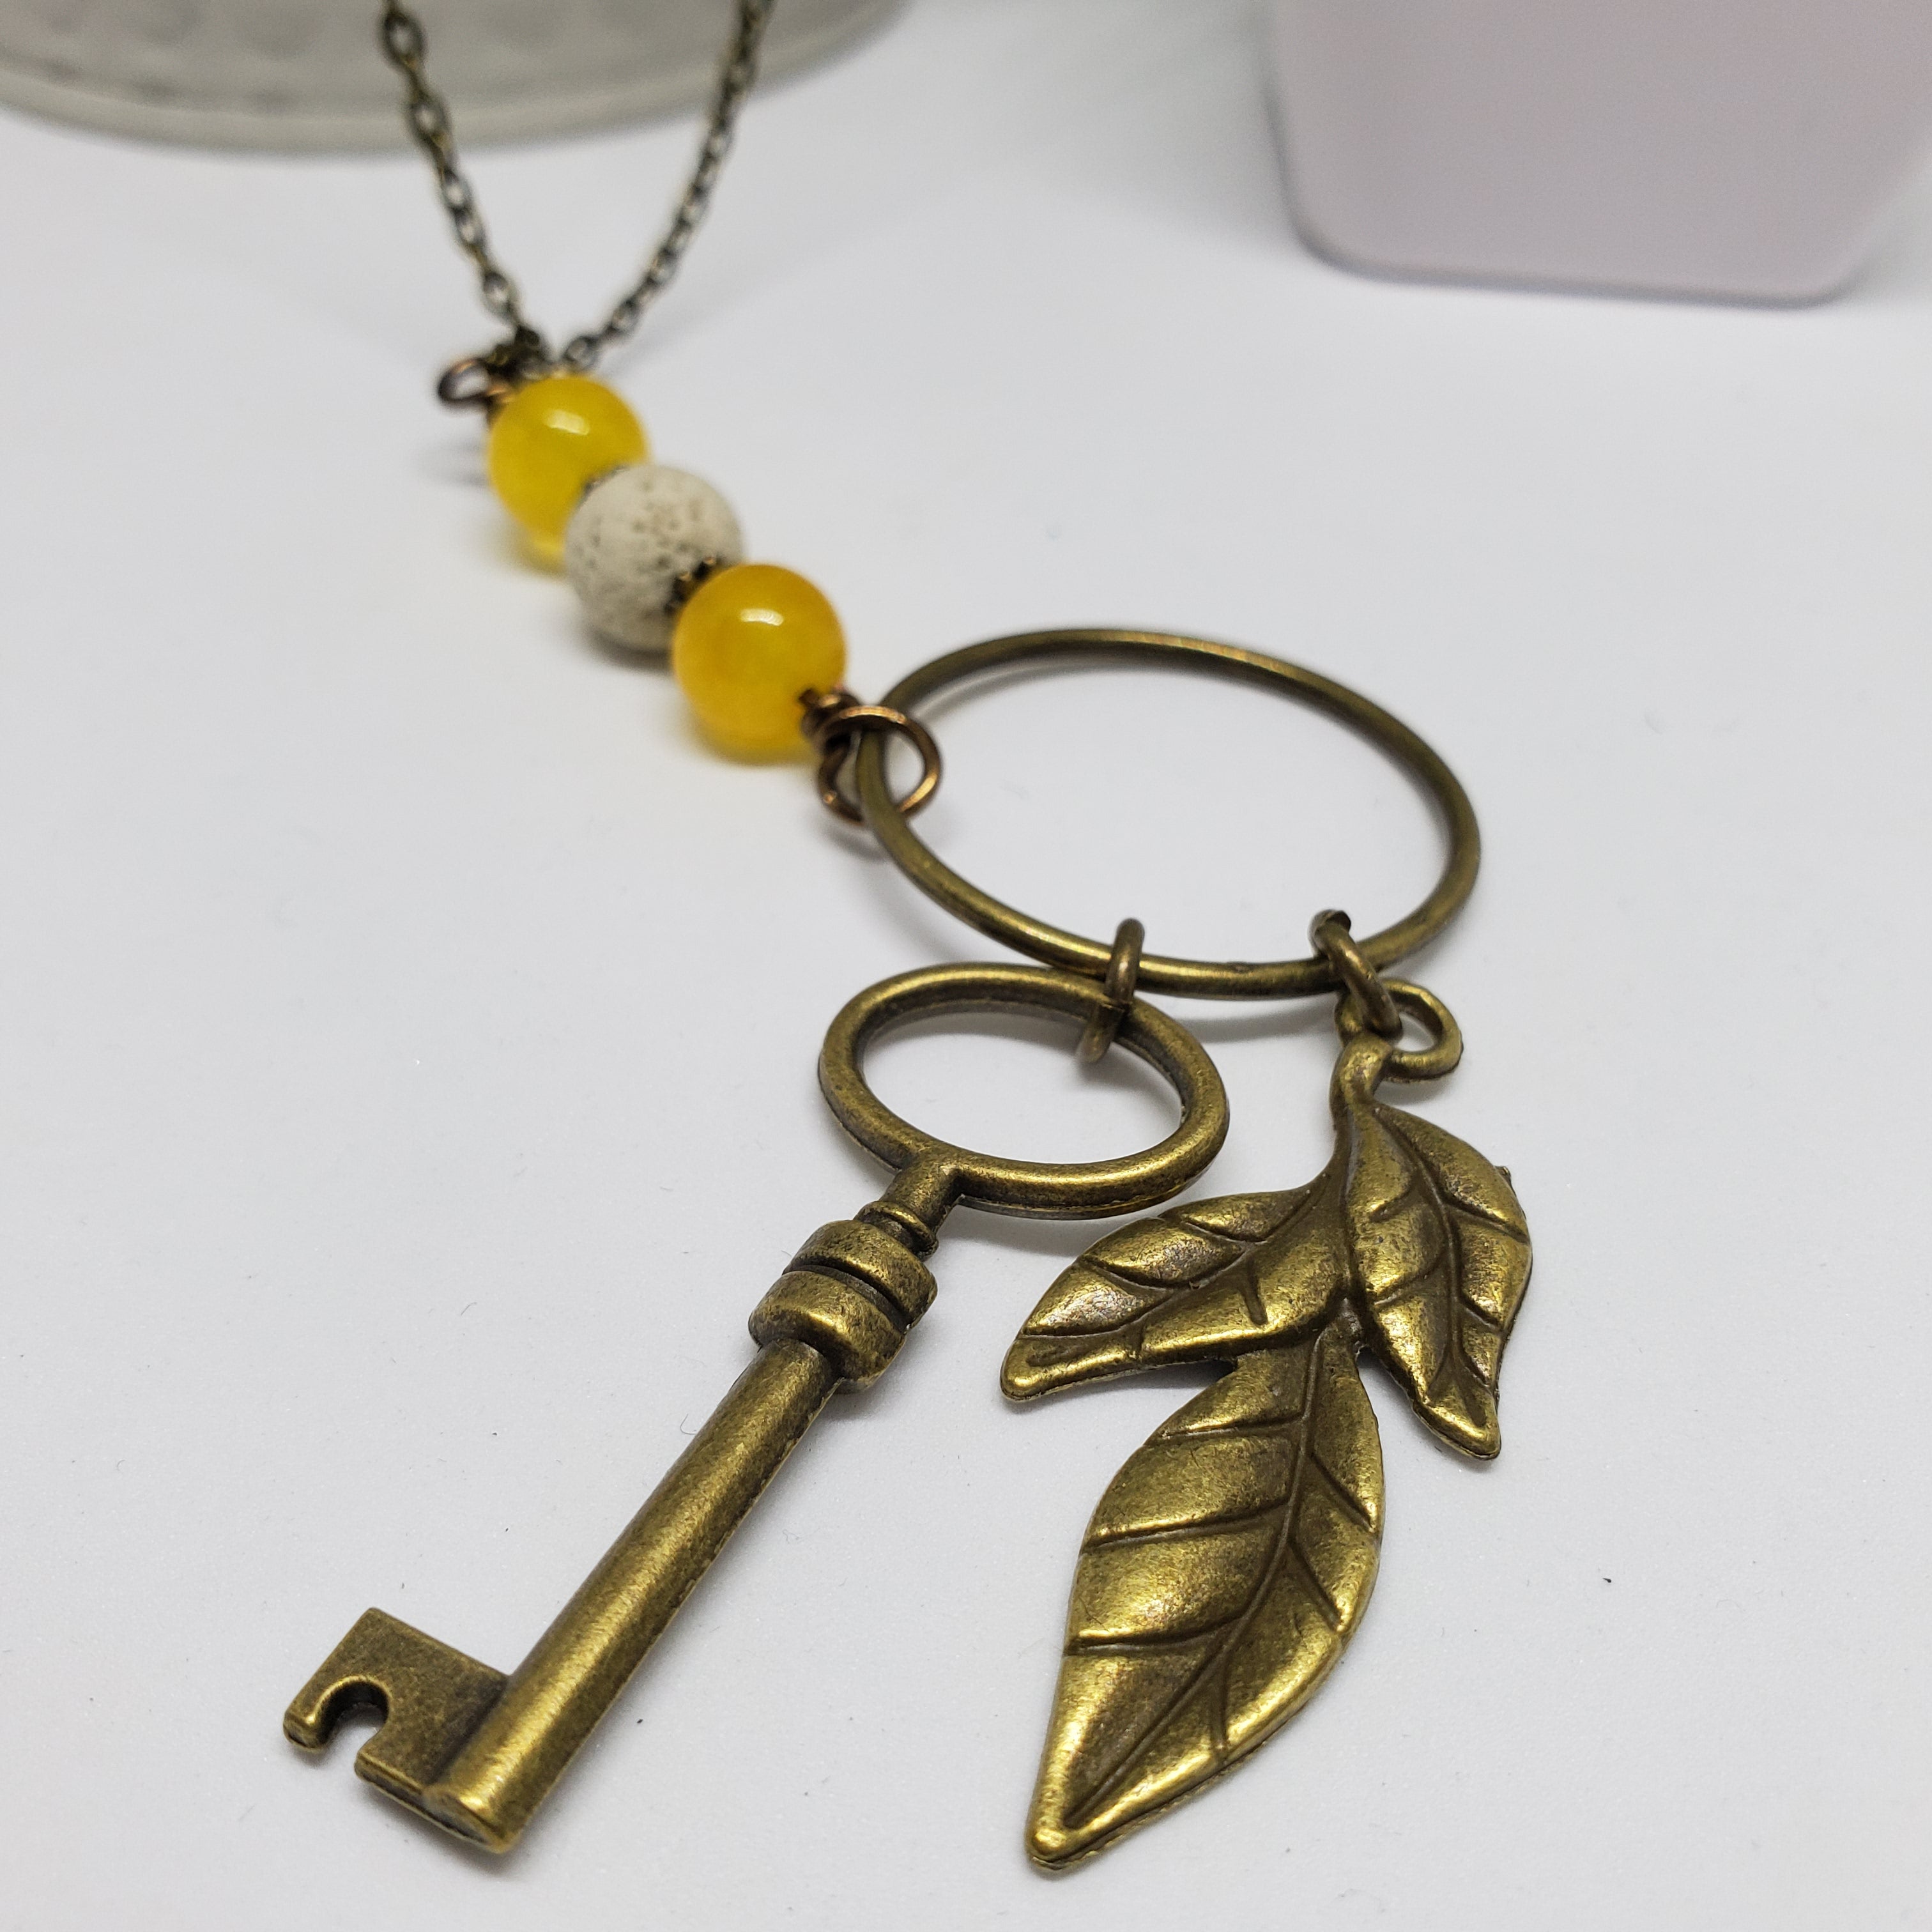 Antique Bronze Key with Yellow Jade Stone White Lava beads.